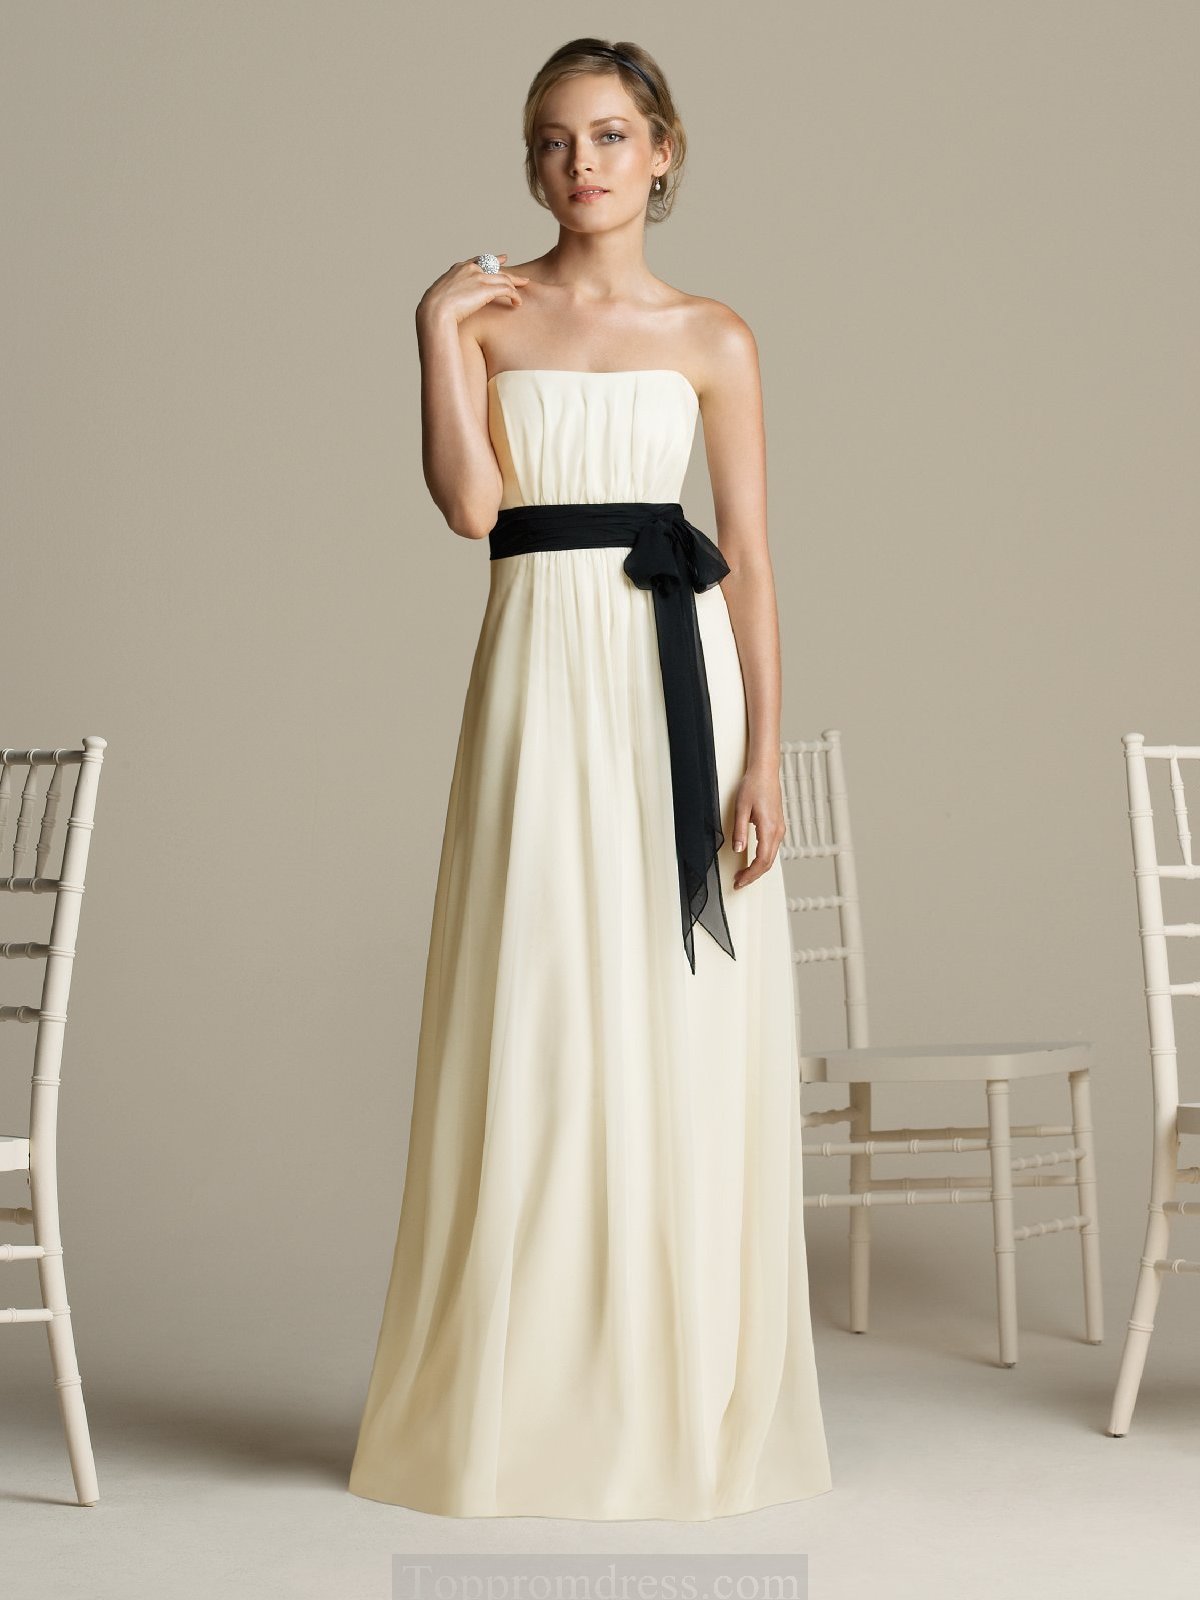 Lace Wedding Dress With Black Sash  HD Wallpaper